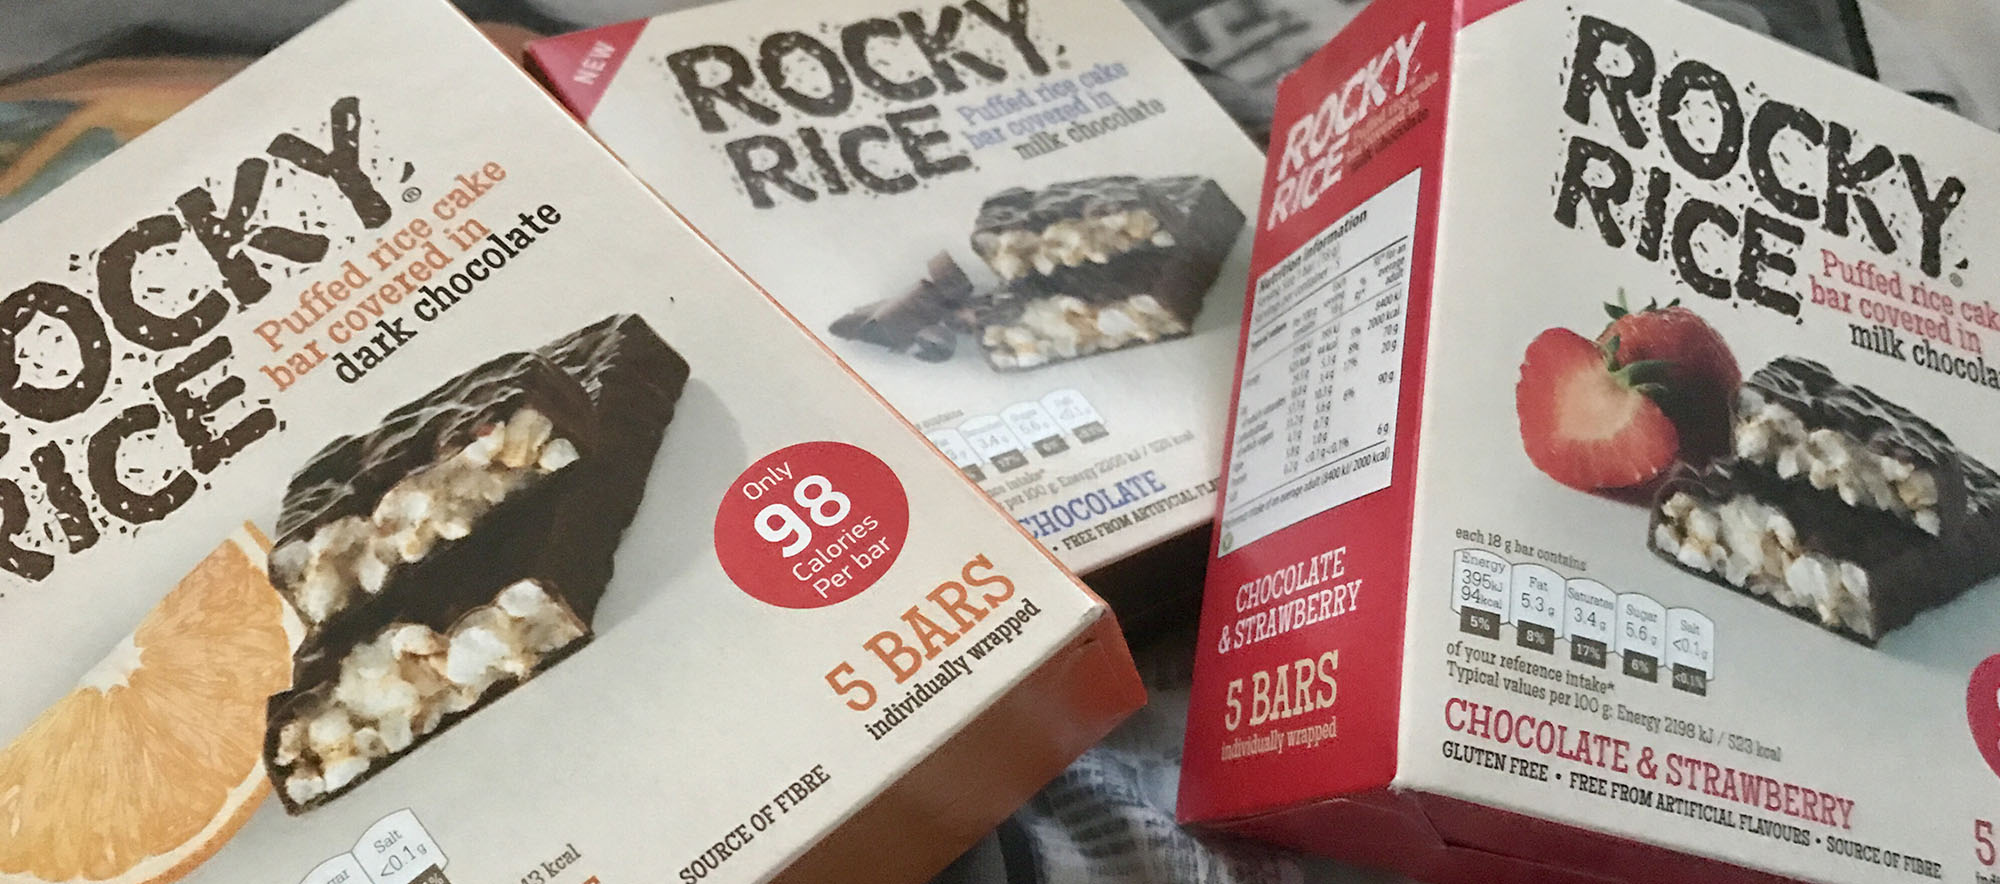 Rocky Rice Milk – Crunchy confection with milk